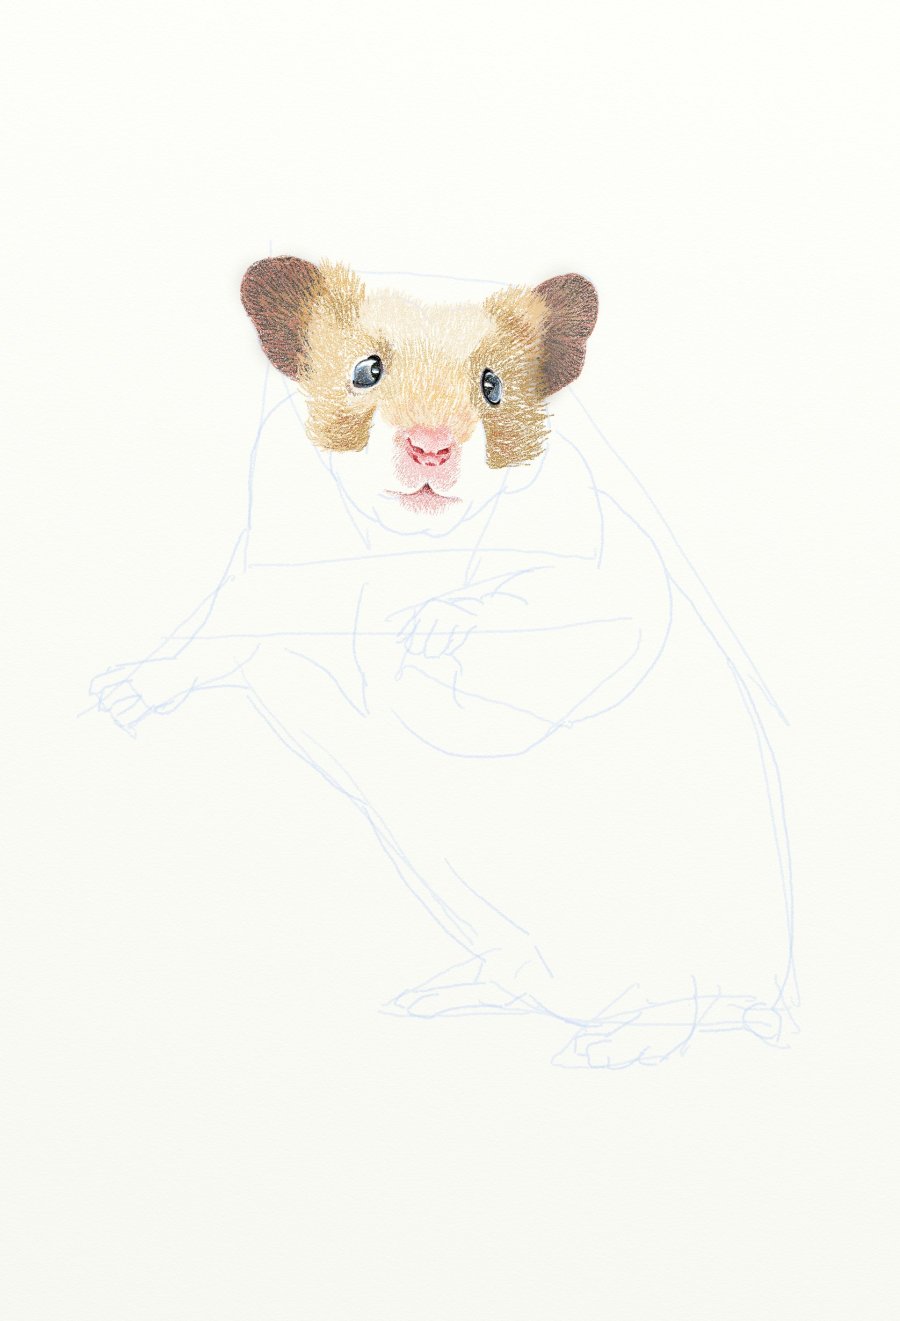 painter绘制一只可爱的小老鼠插画7